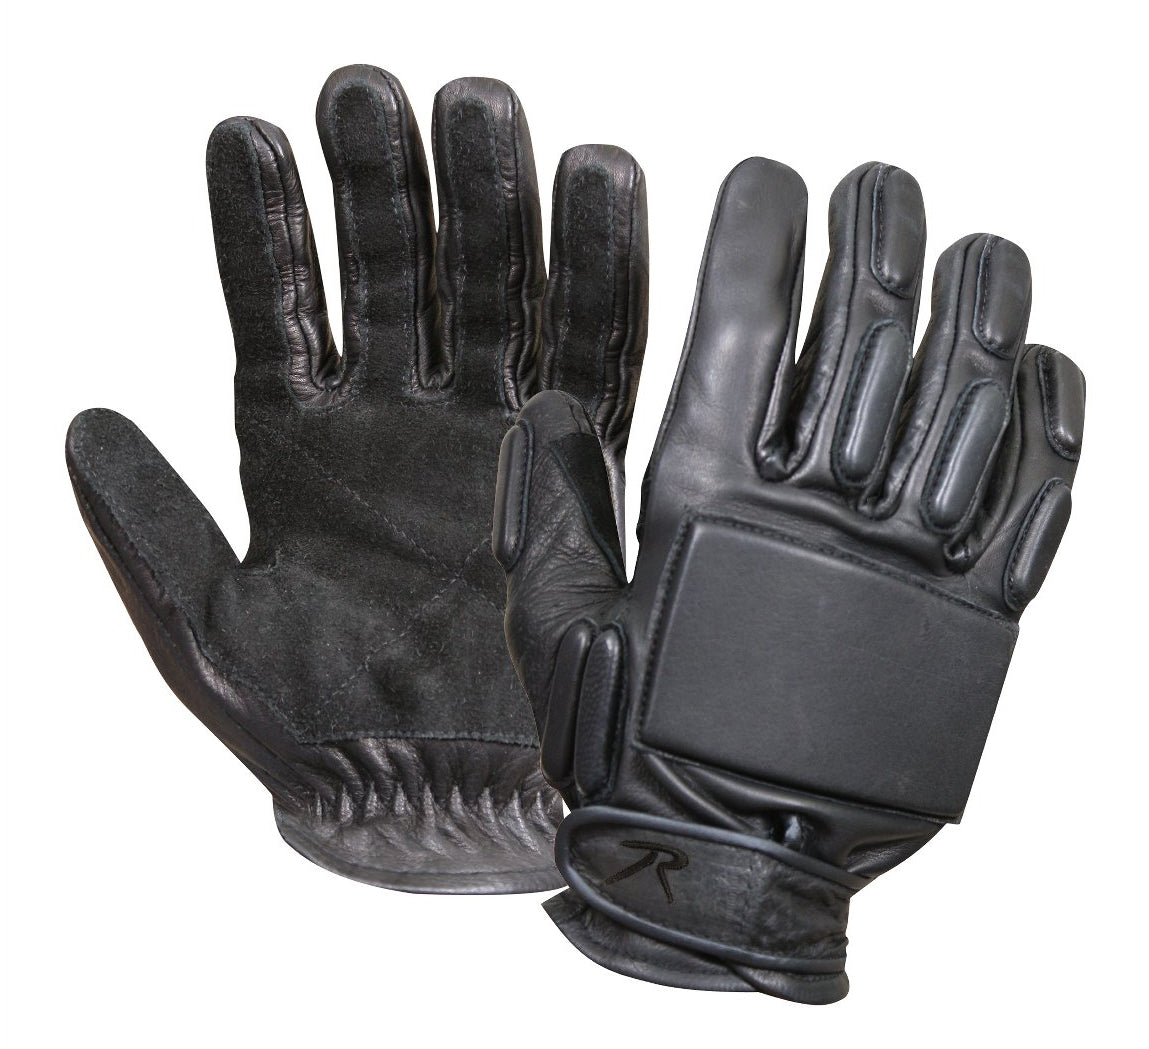 Milspec Full-Finger Rappelling Gloves Gloves MilTac Tactical Military Outdoor Gear Australia